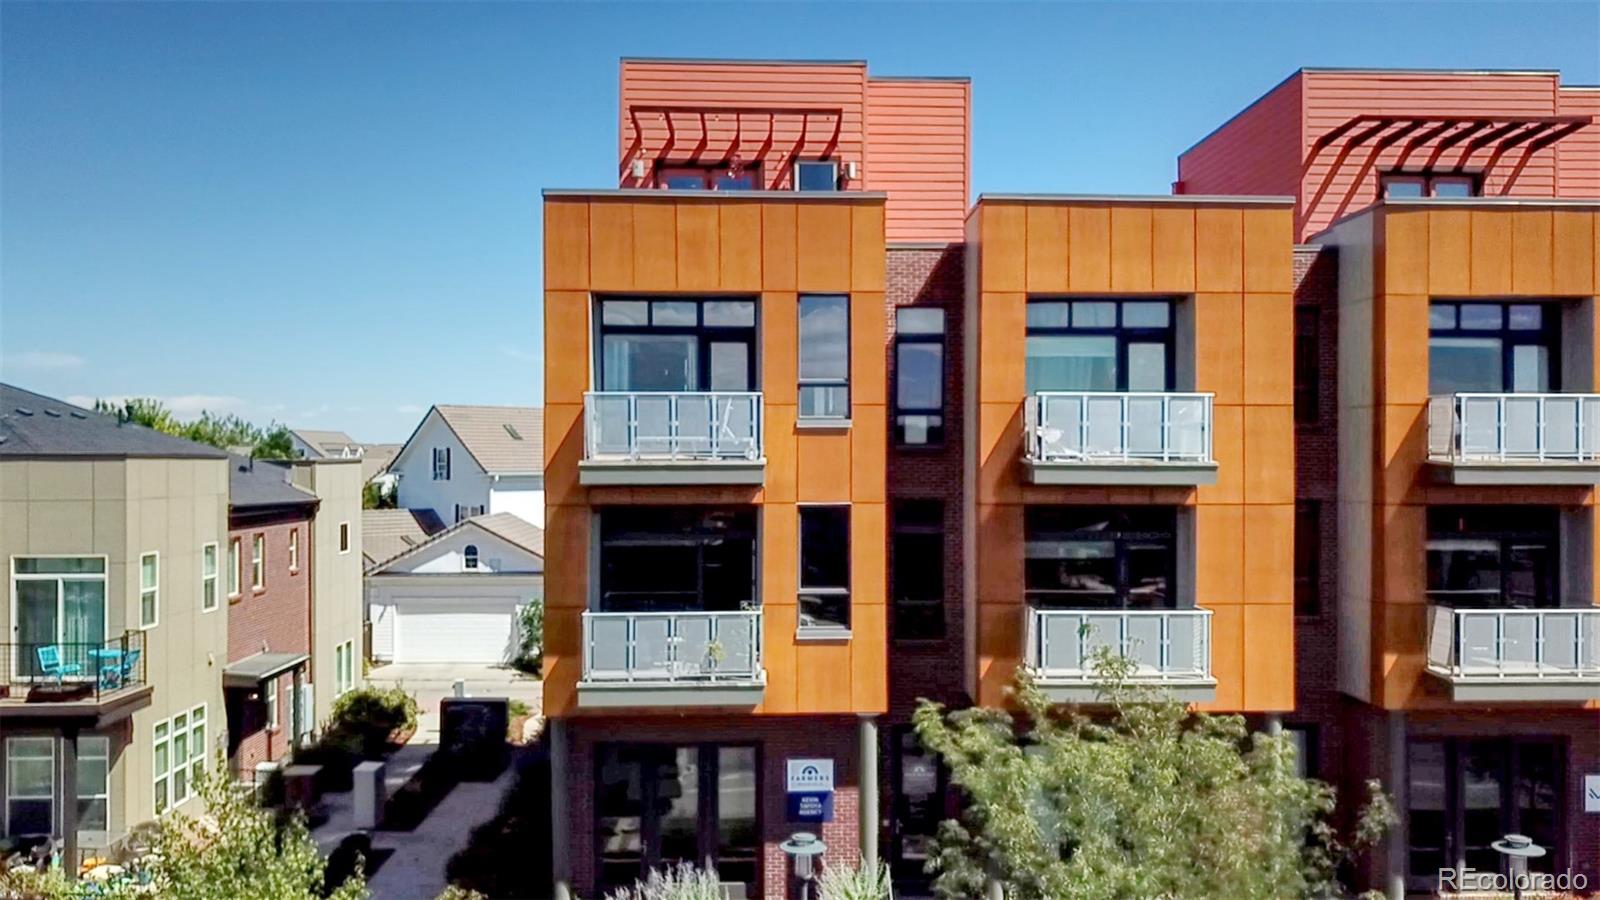 Blaine Apartment Complex Sells for $23 Million